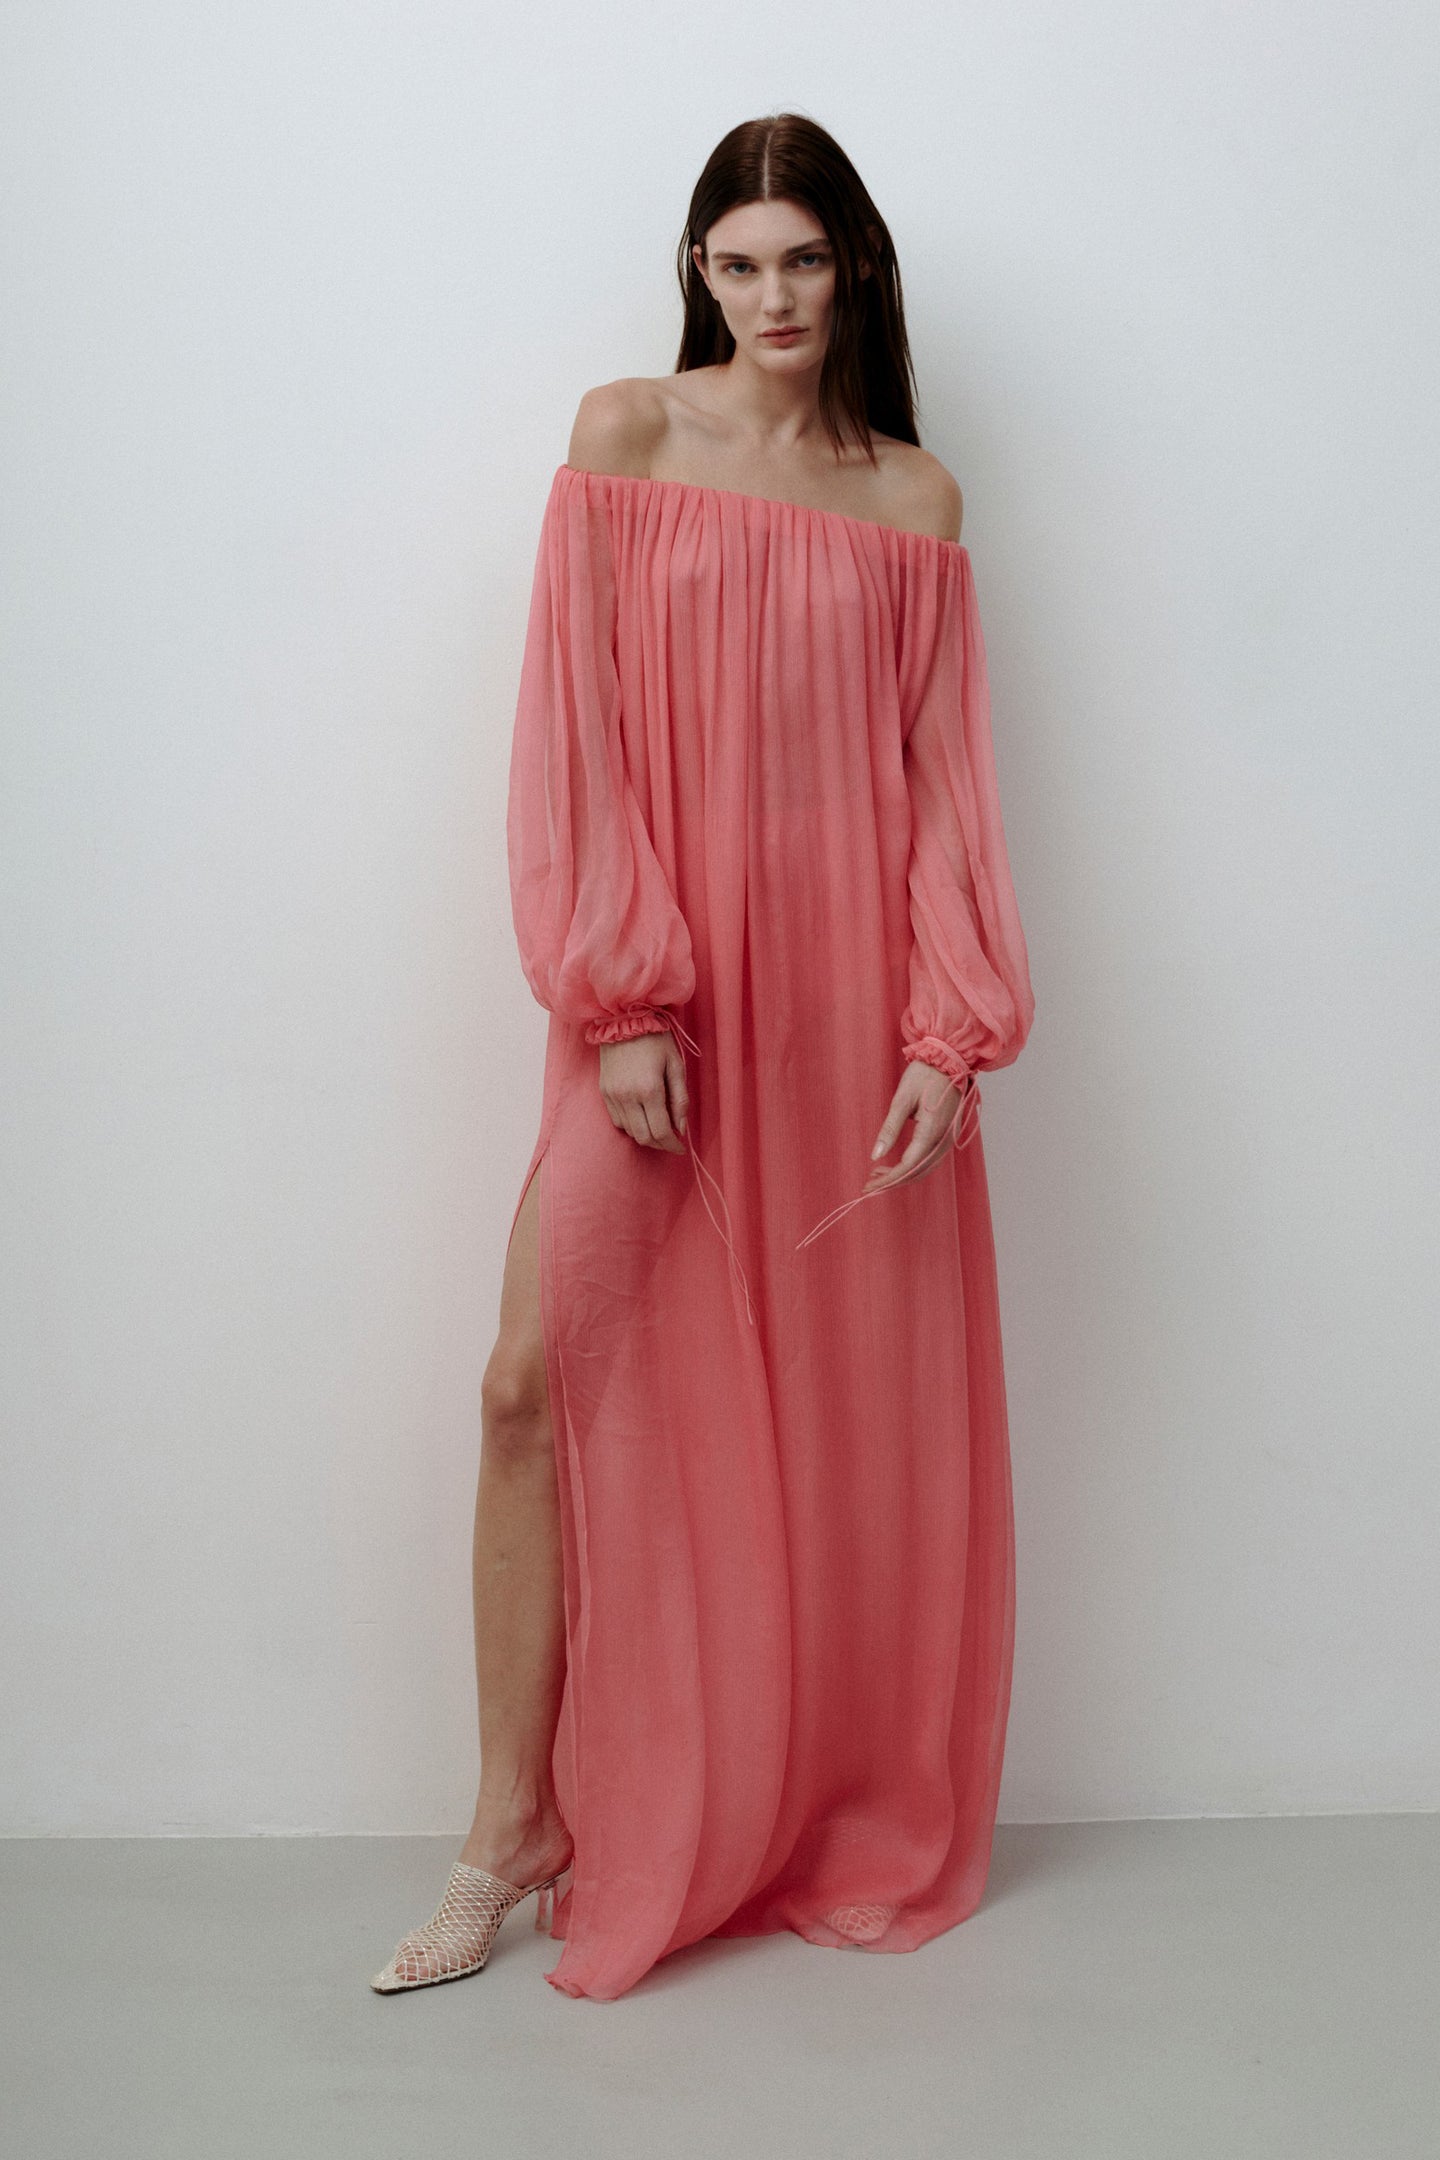 Model in pink Milani dress